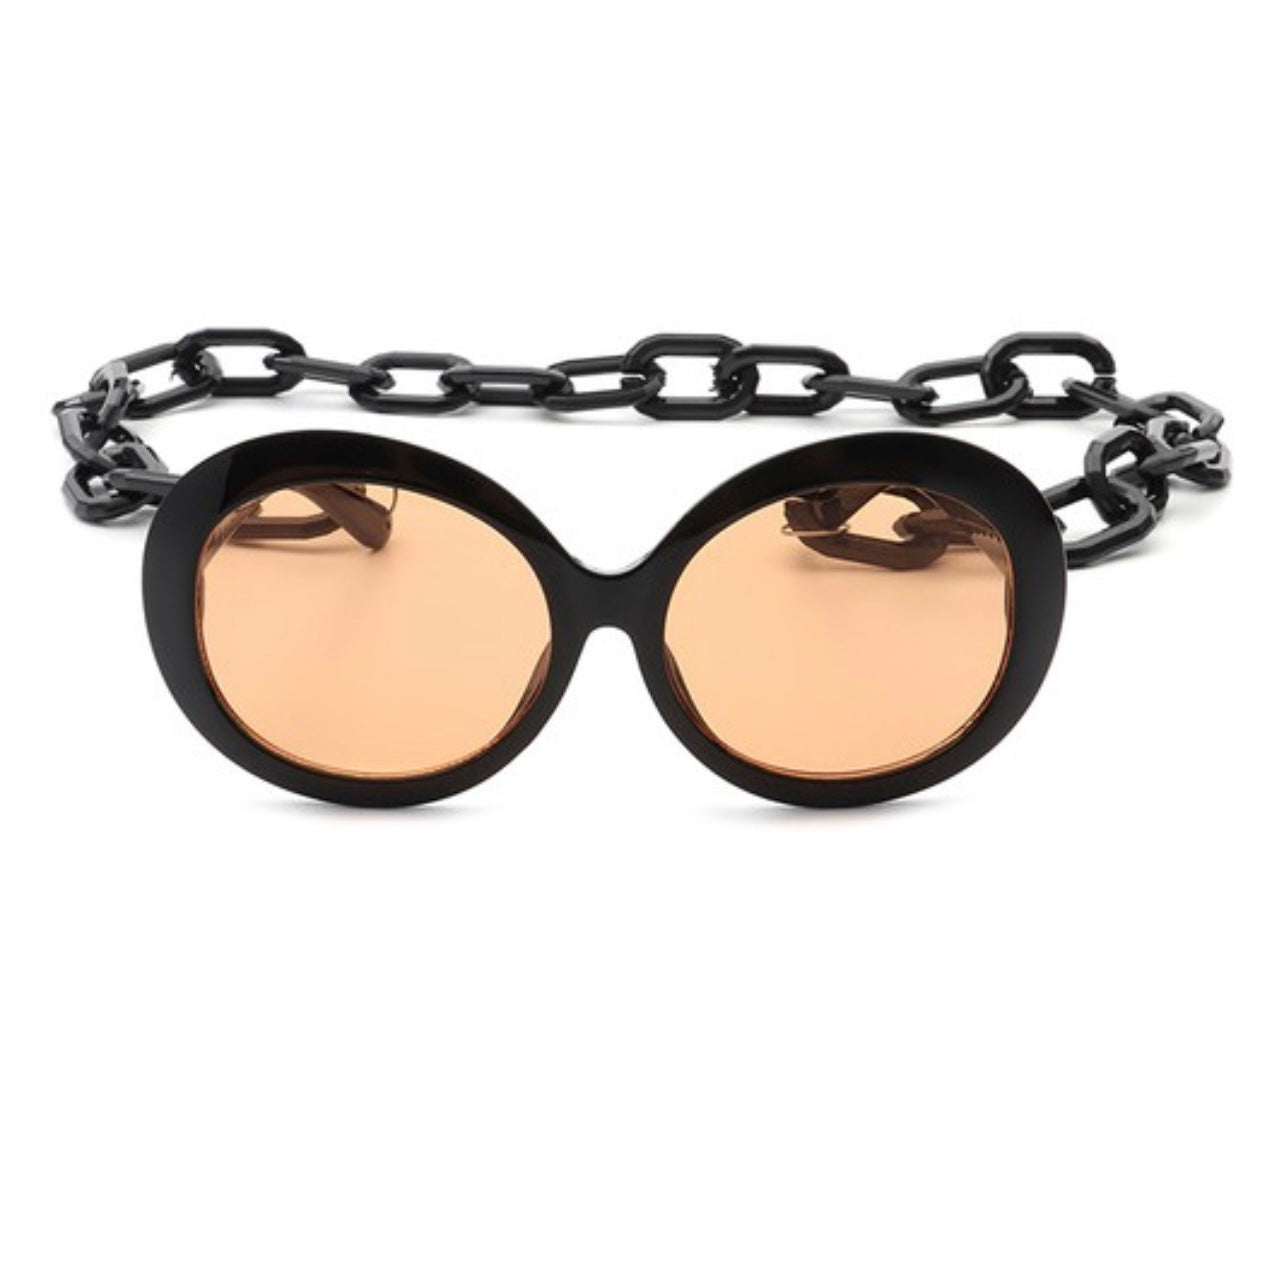 Shade On A Chain Sunglasses